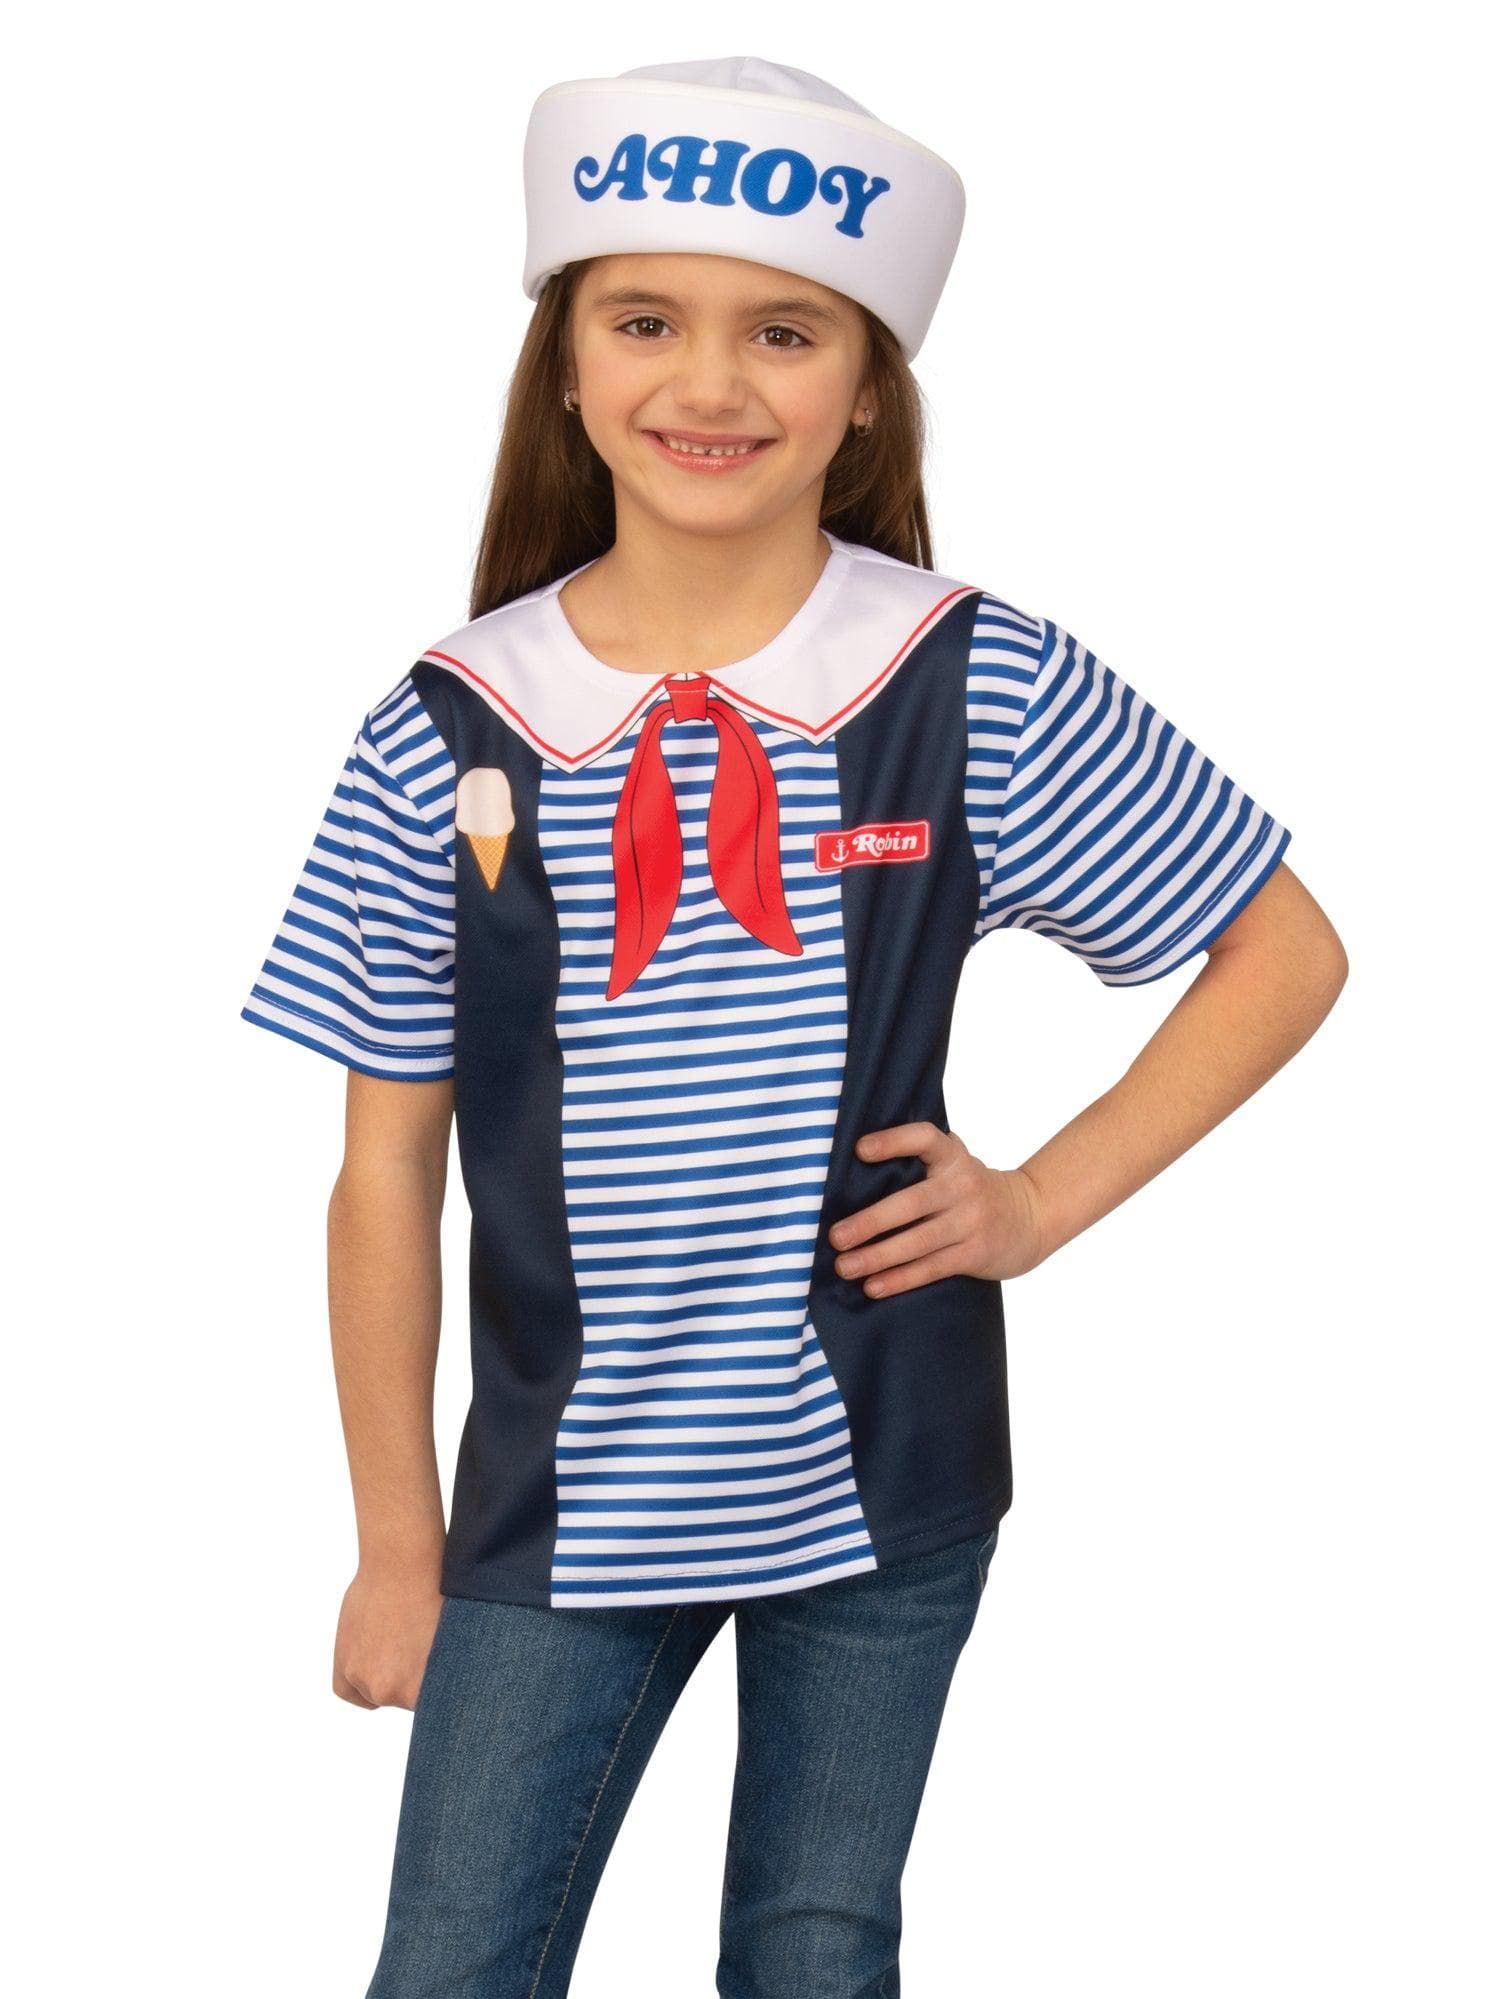 Girls' Stranger Things Robin Scoops Ahoy Uniform Costume - costumes.com